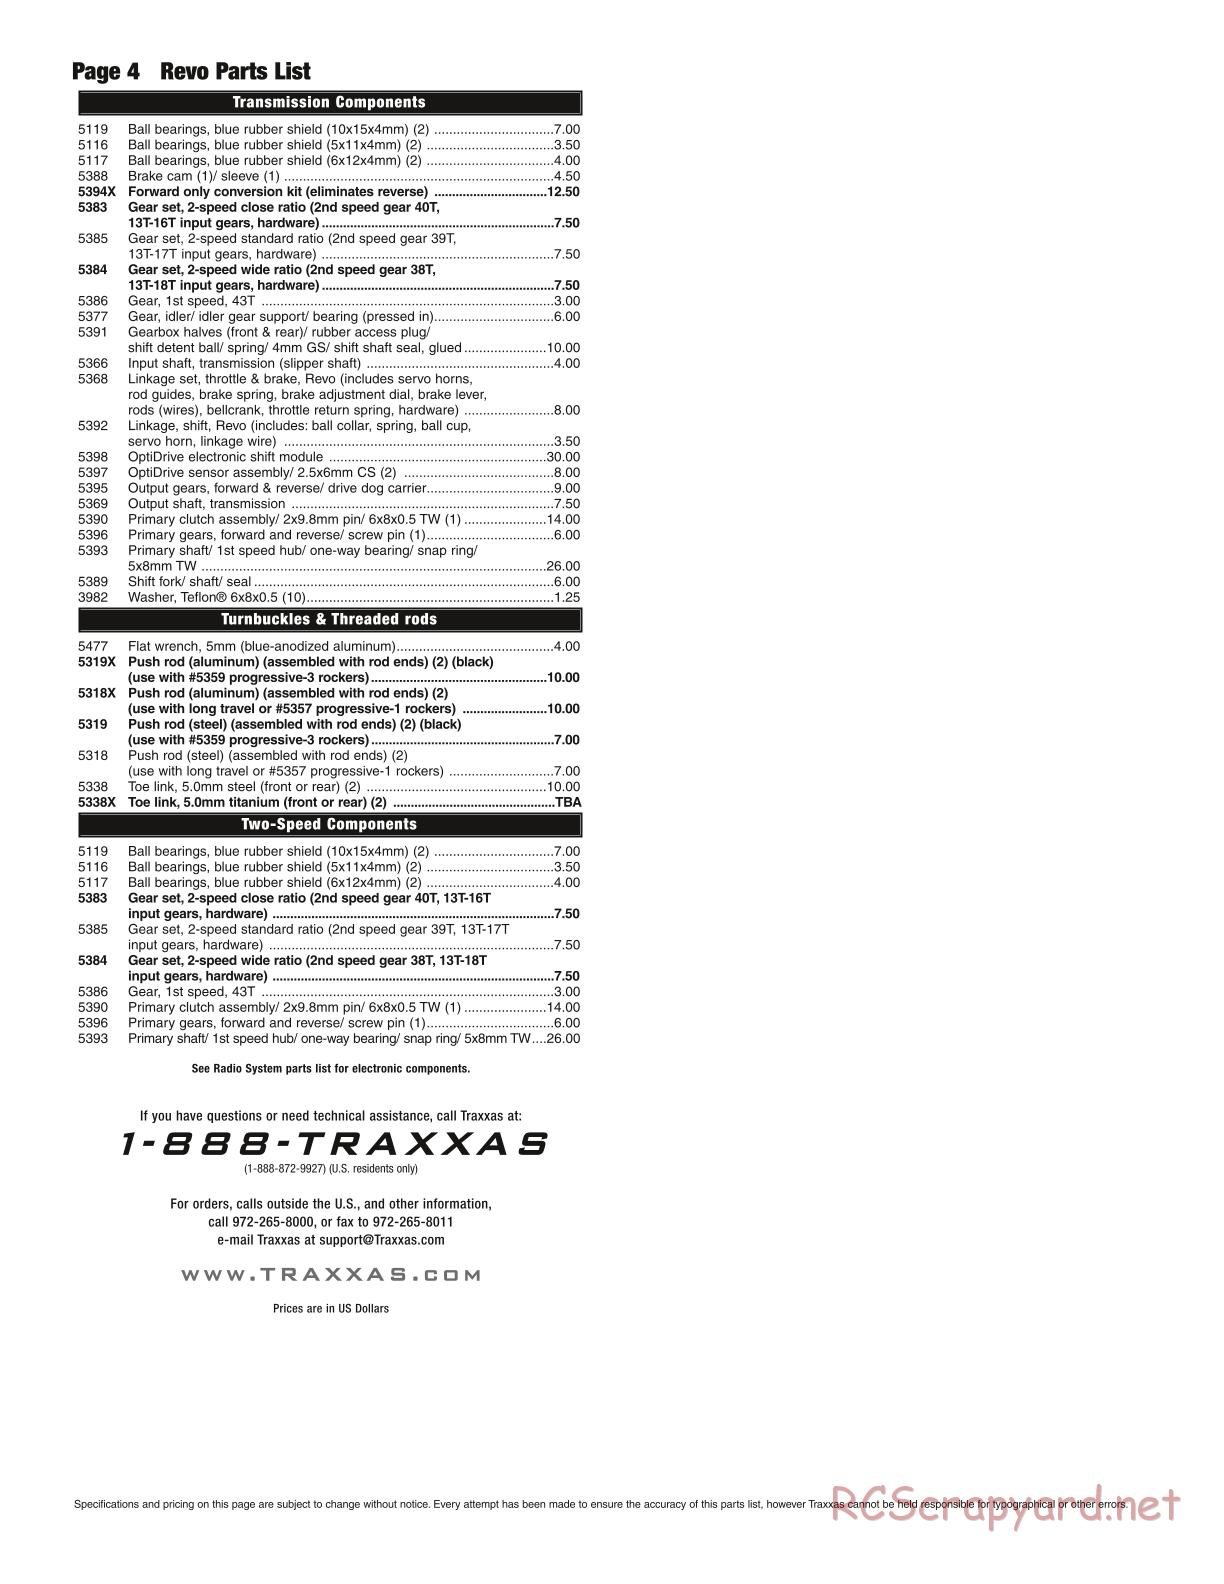 Traxxas - Revo 2.5R (2004) - Parts List - Page 4